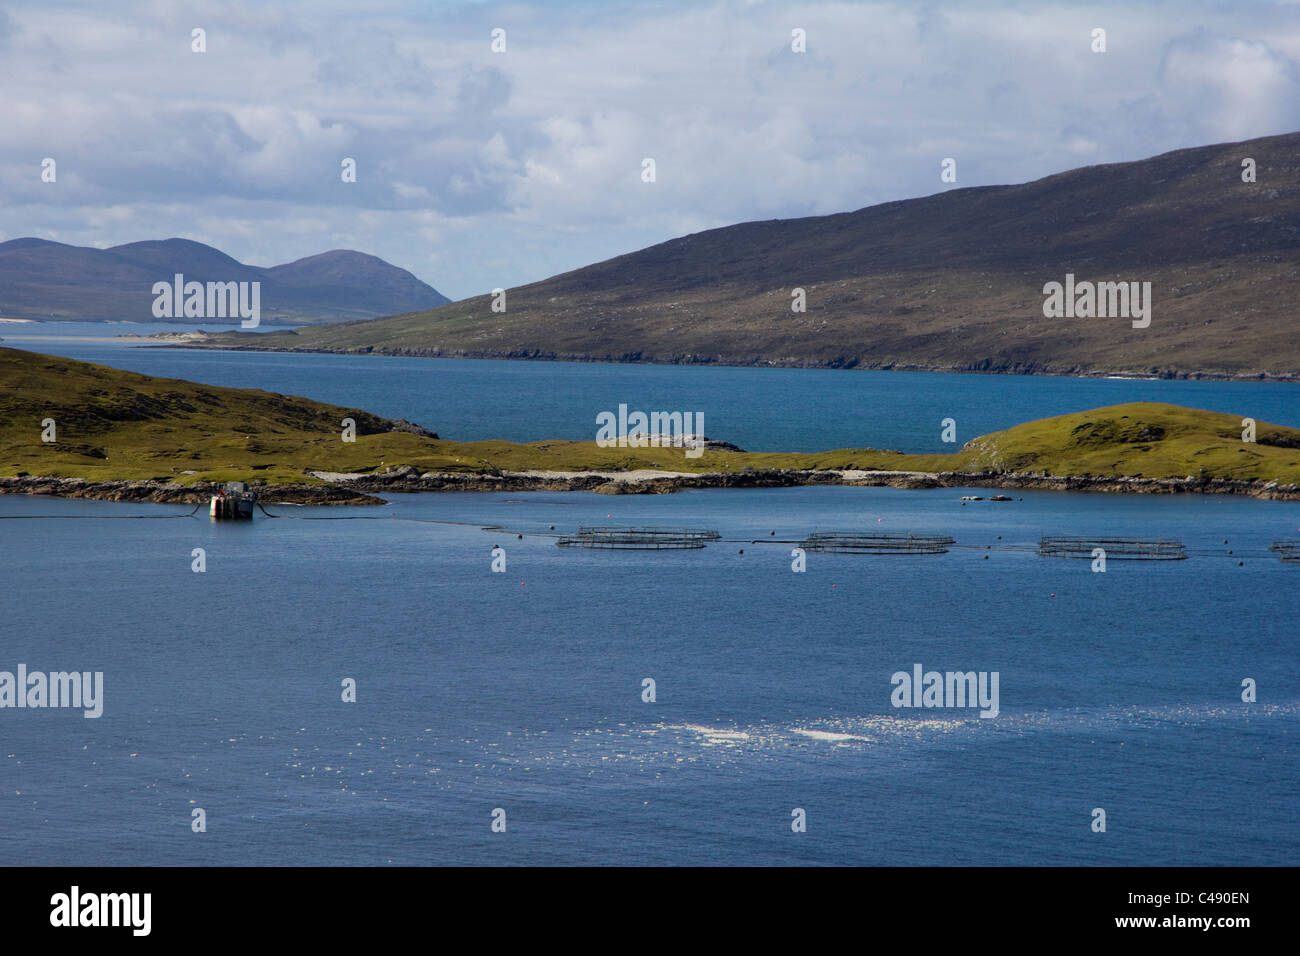 salmon farm off the coast of the isle of lewis scotland Stock Photo